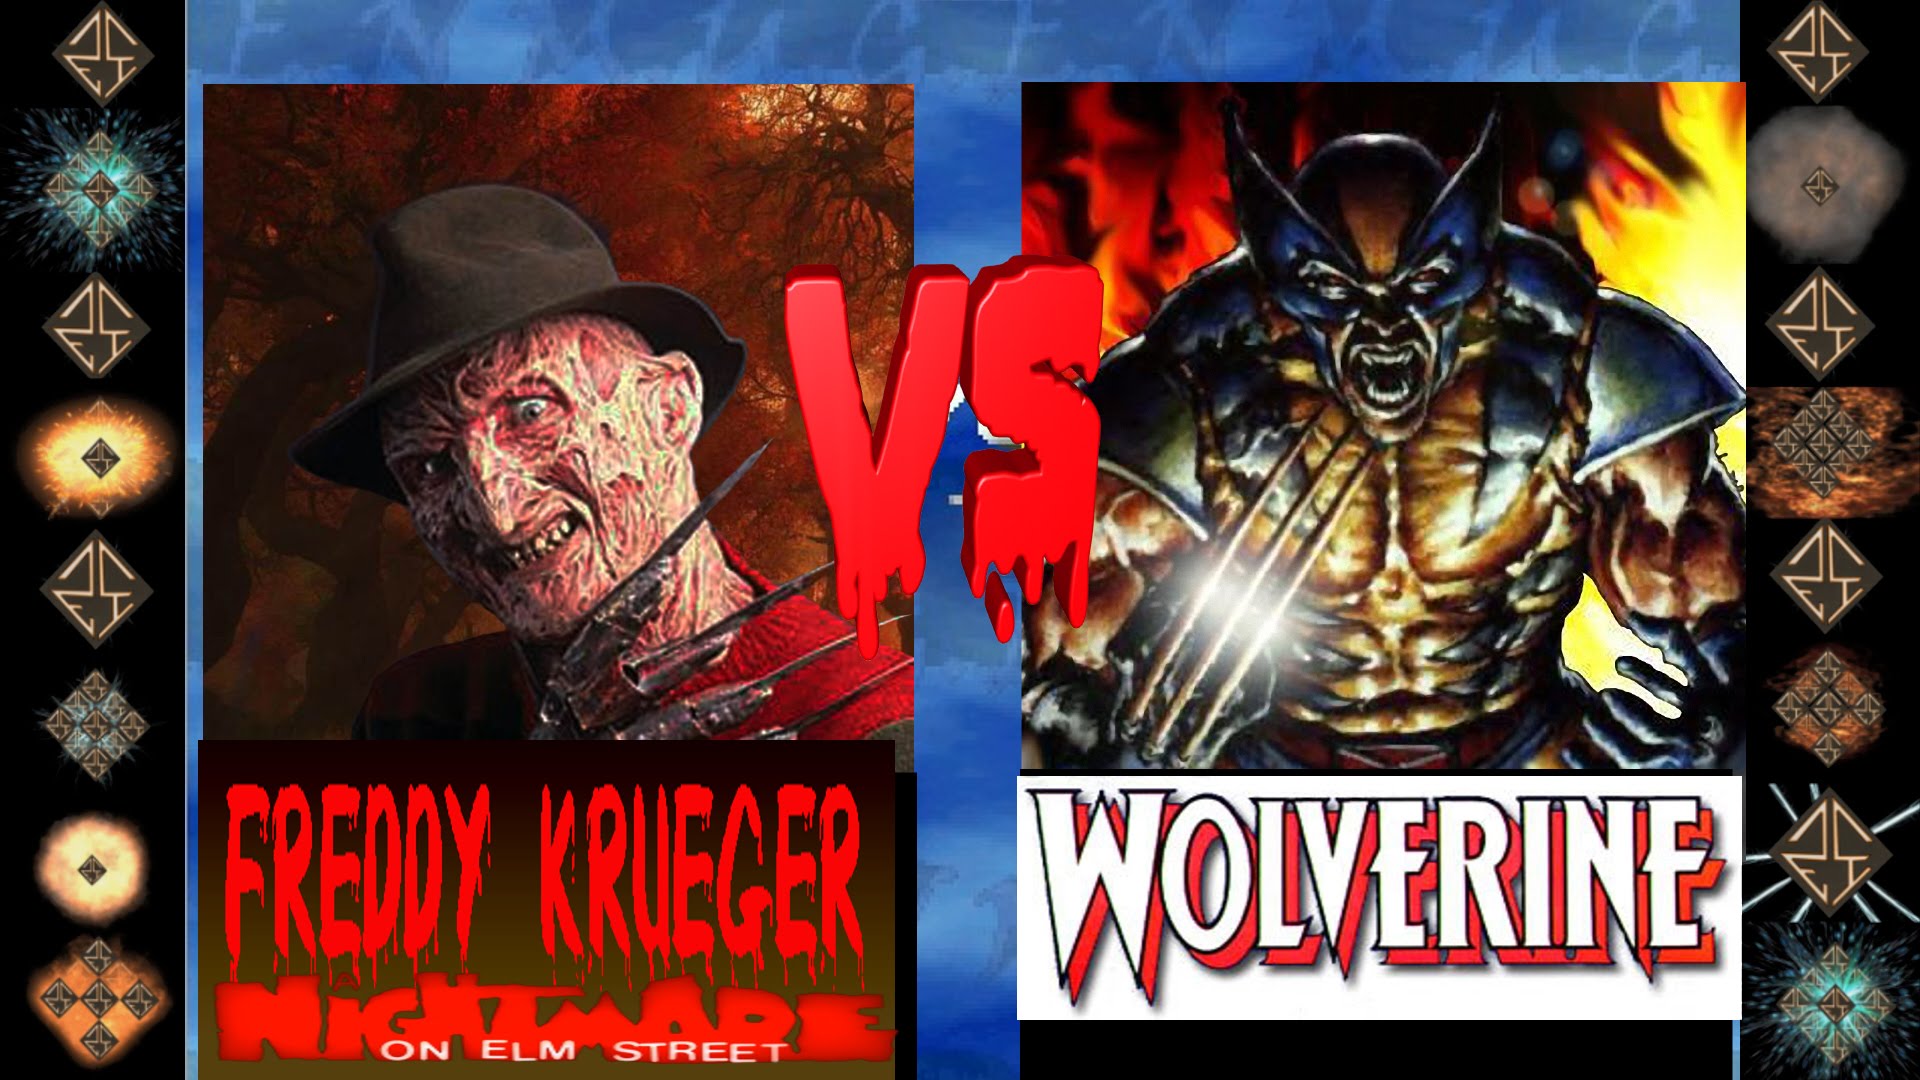 Wolverine Vs. Freddy HD wallpapers, Desktop wallpaper - most viewed